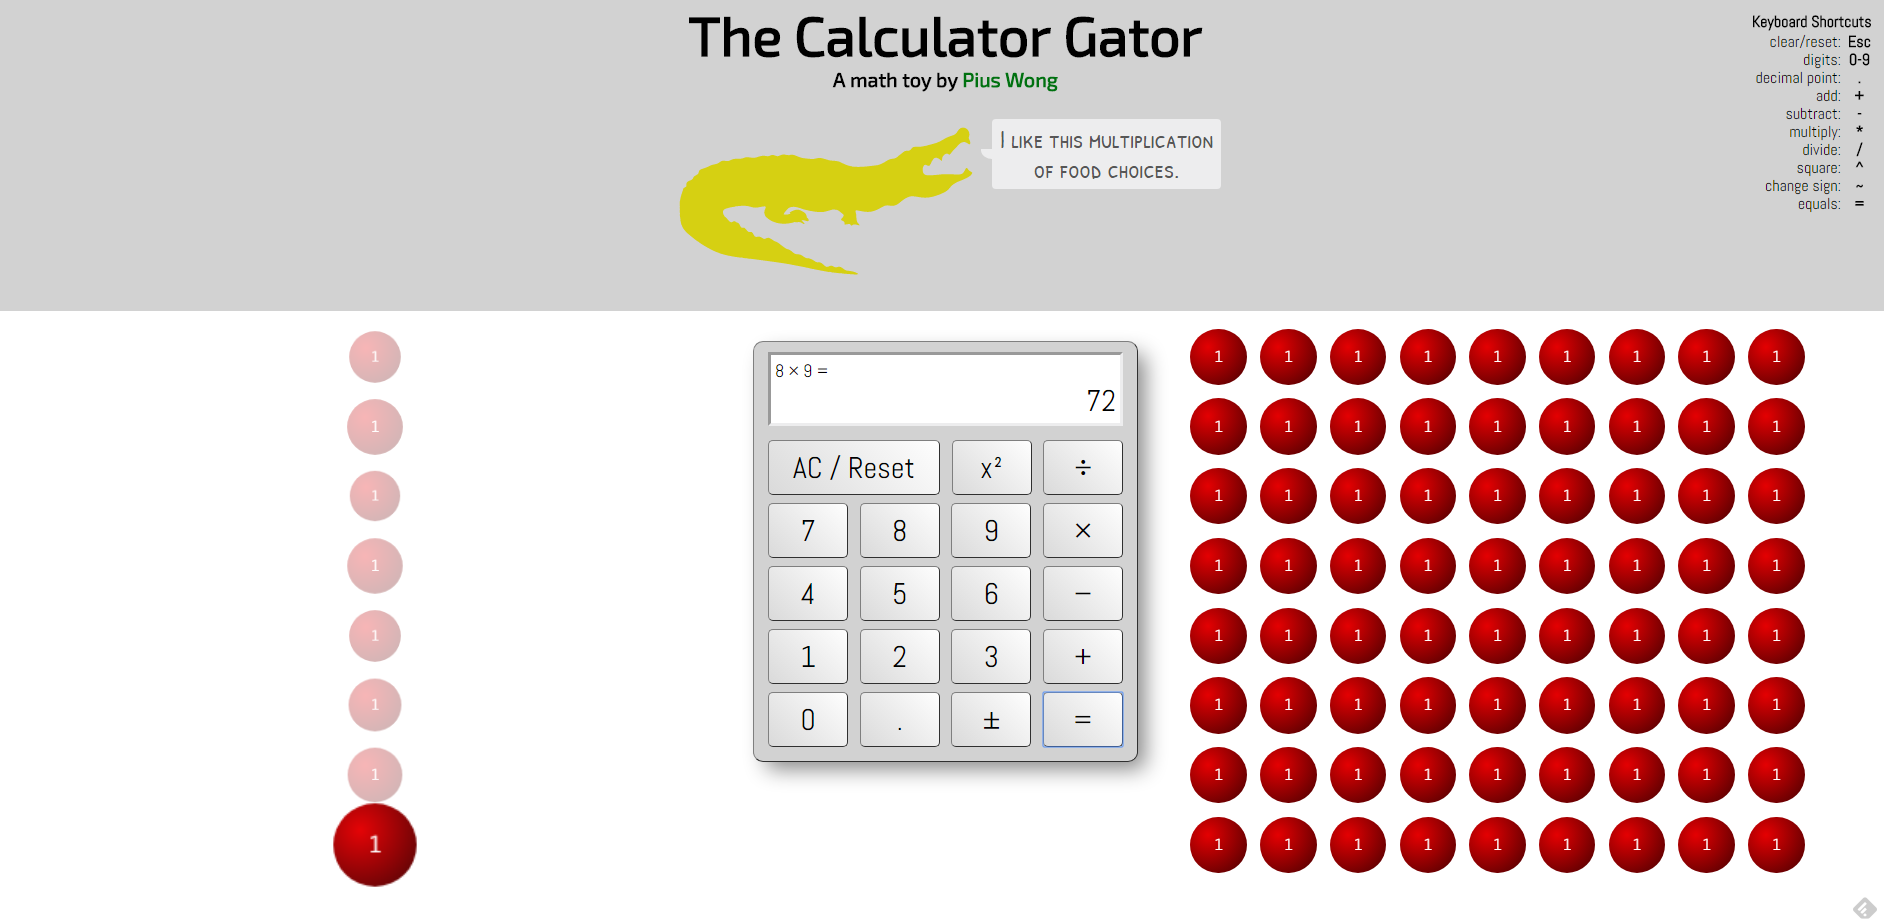 Multiplying on The Calculator Gator